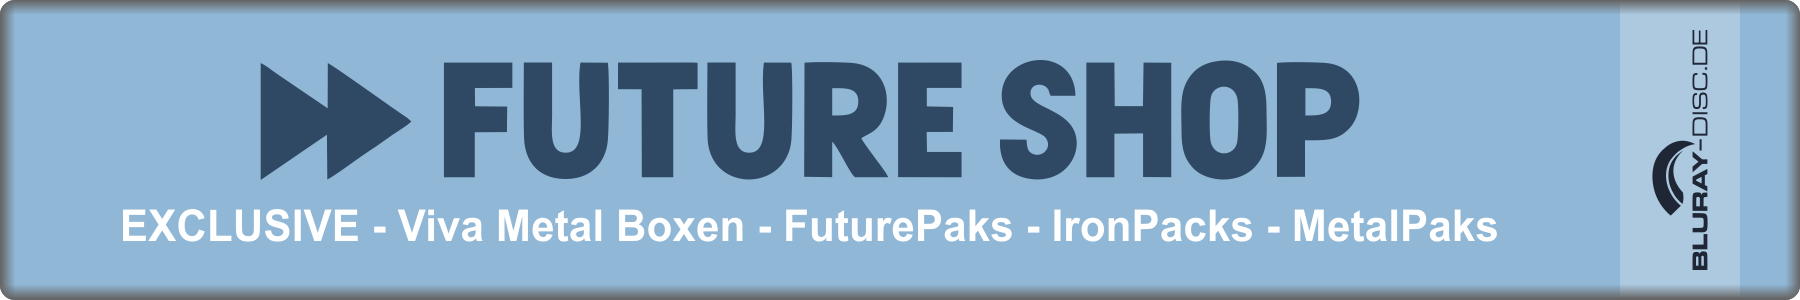 FutureShop_Exclusive_FuturePaks_boxen_etc.png